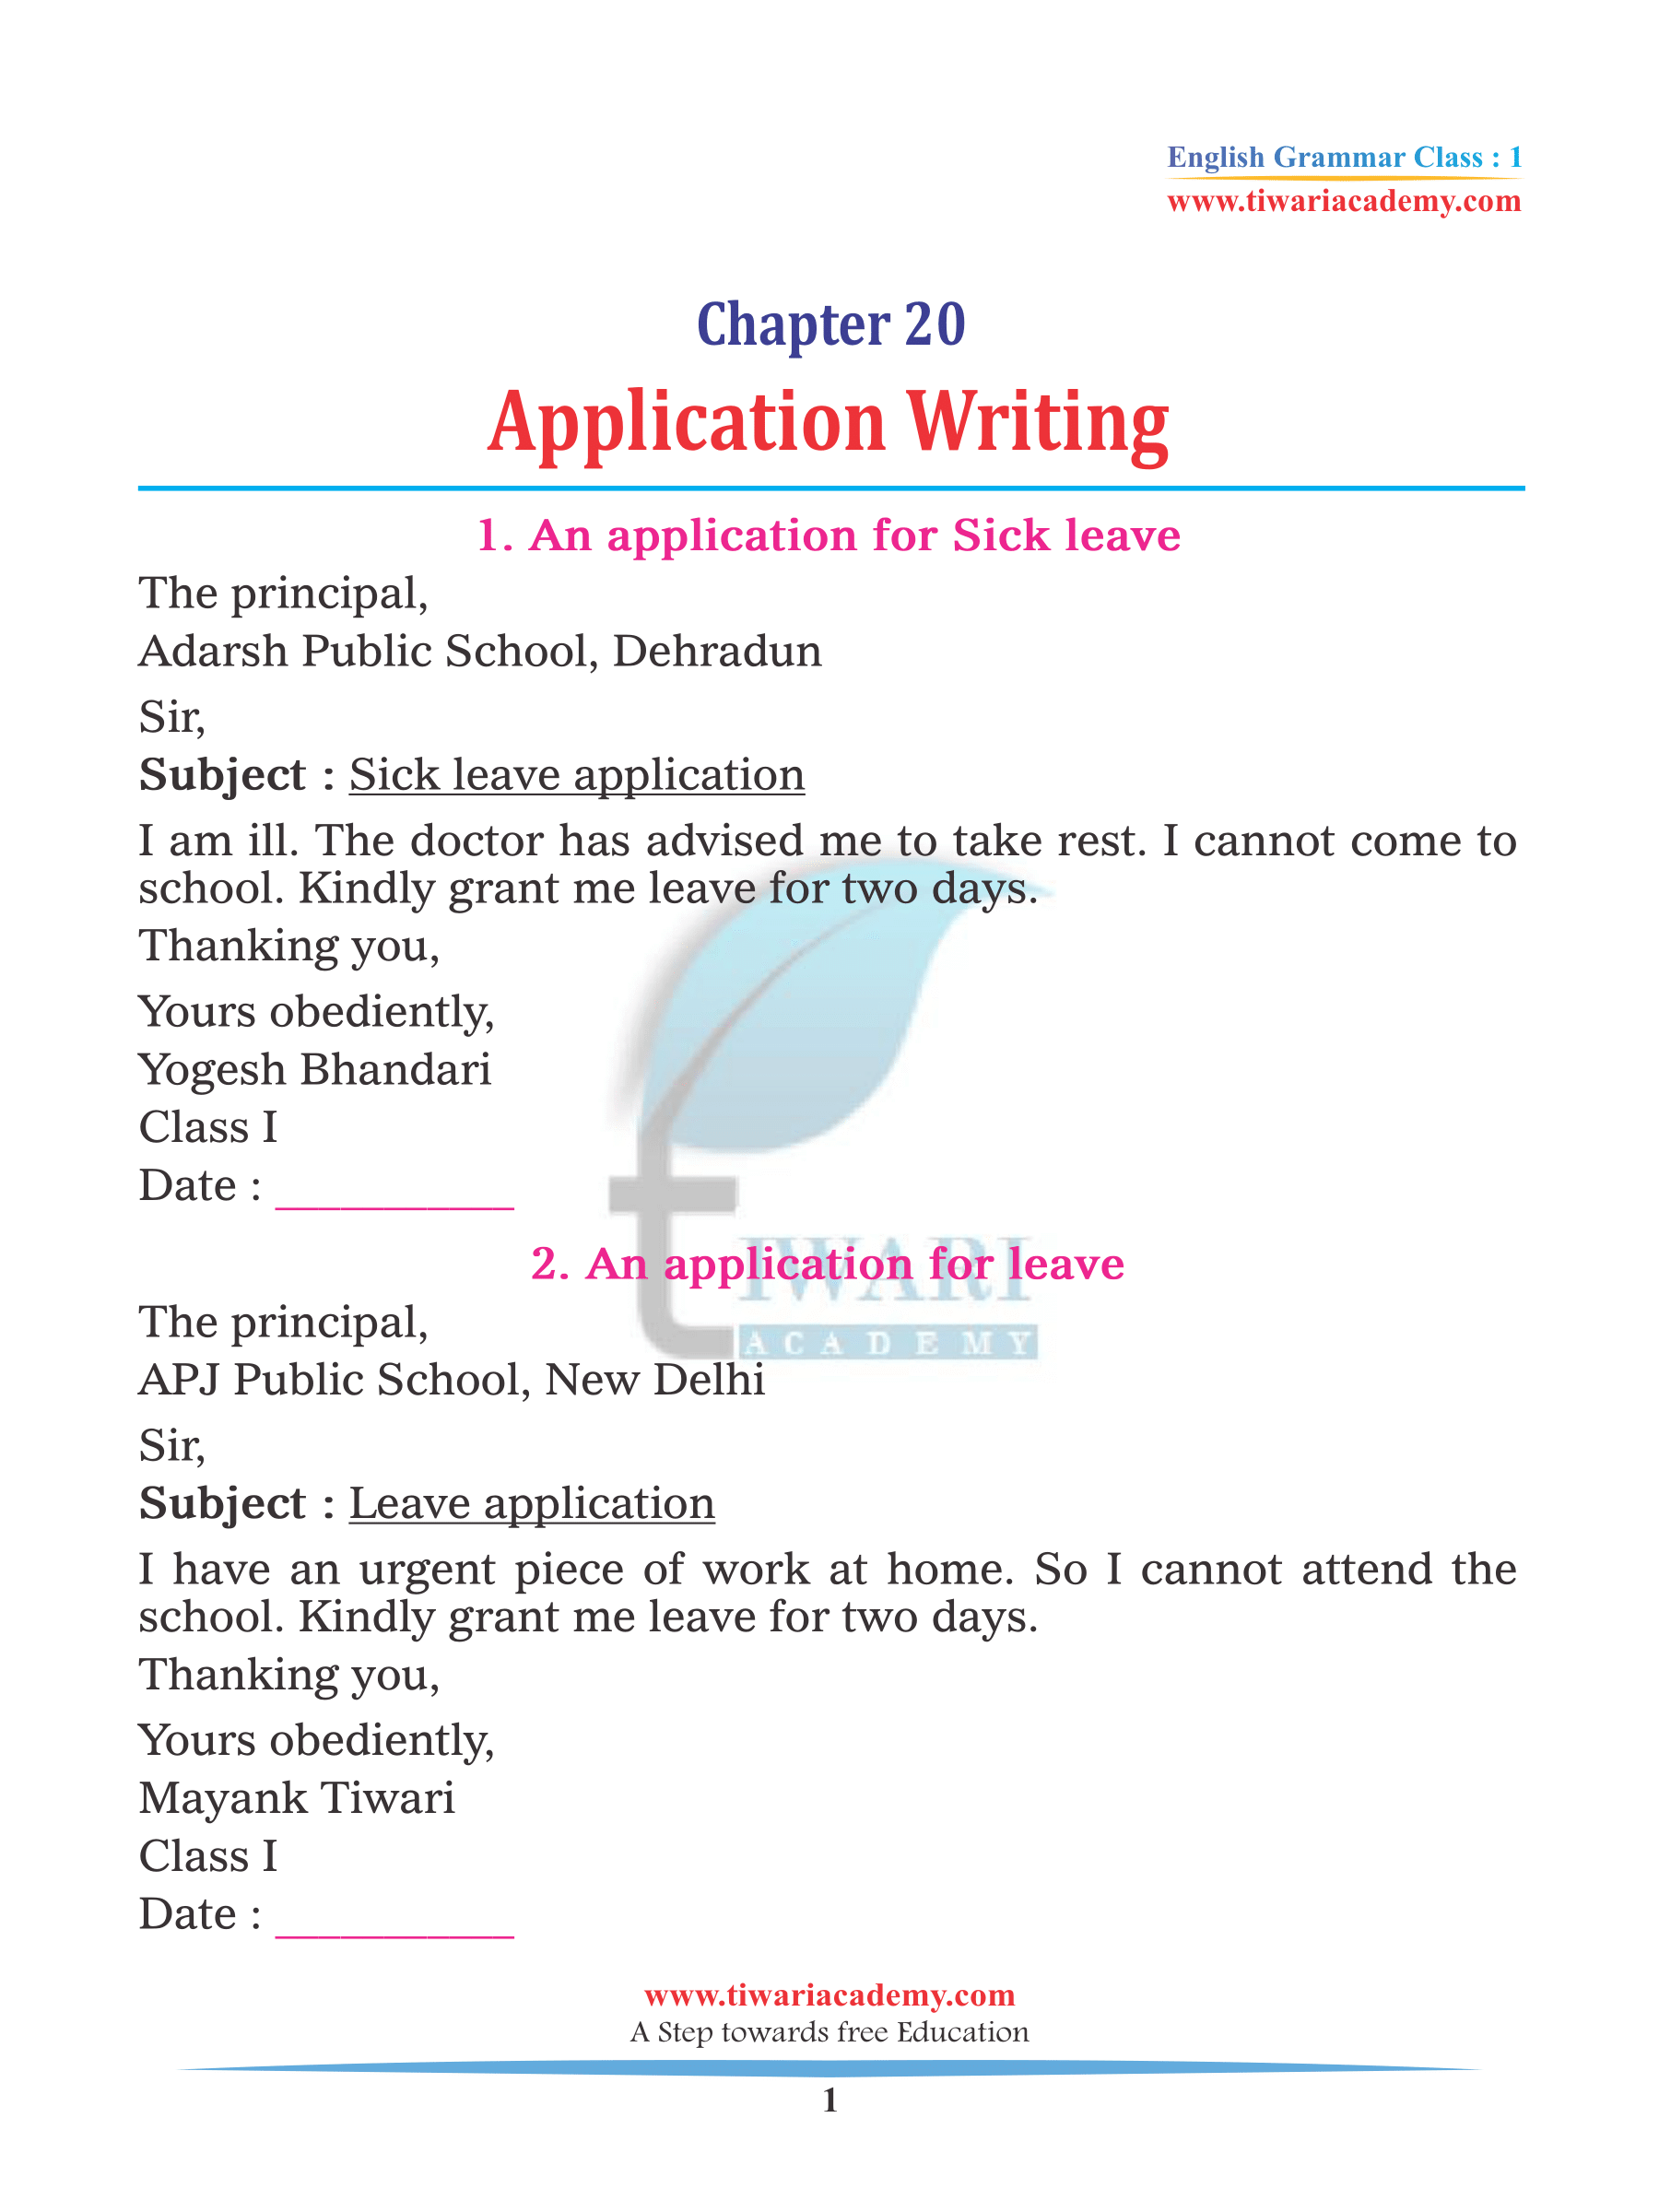 Application Writing for Class 1 English Grammar